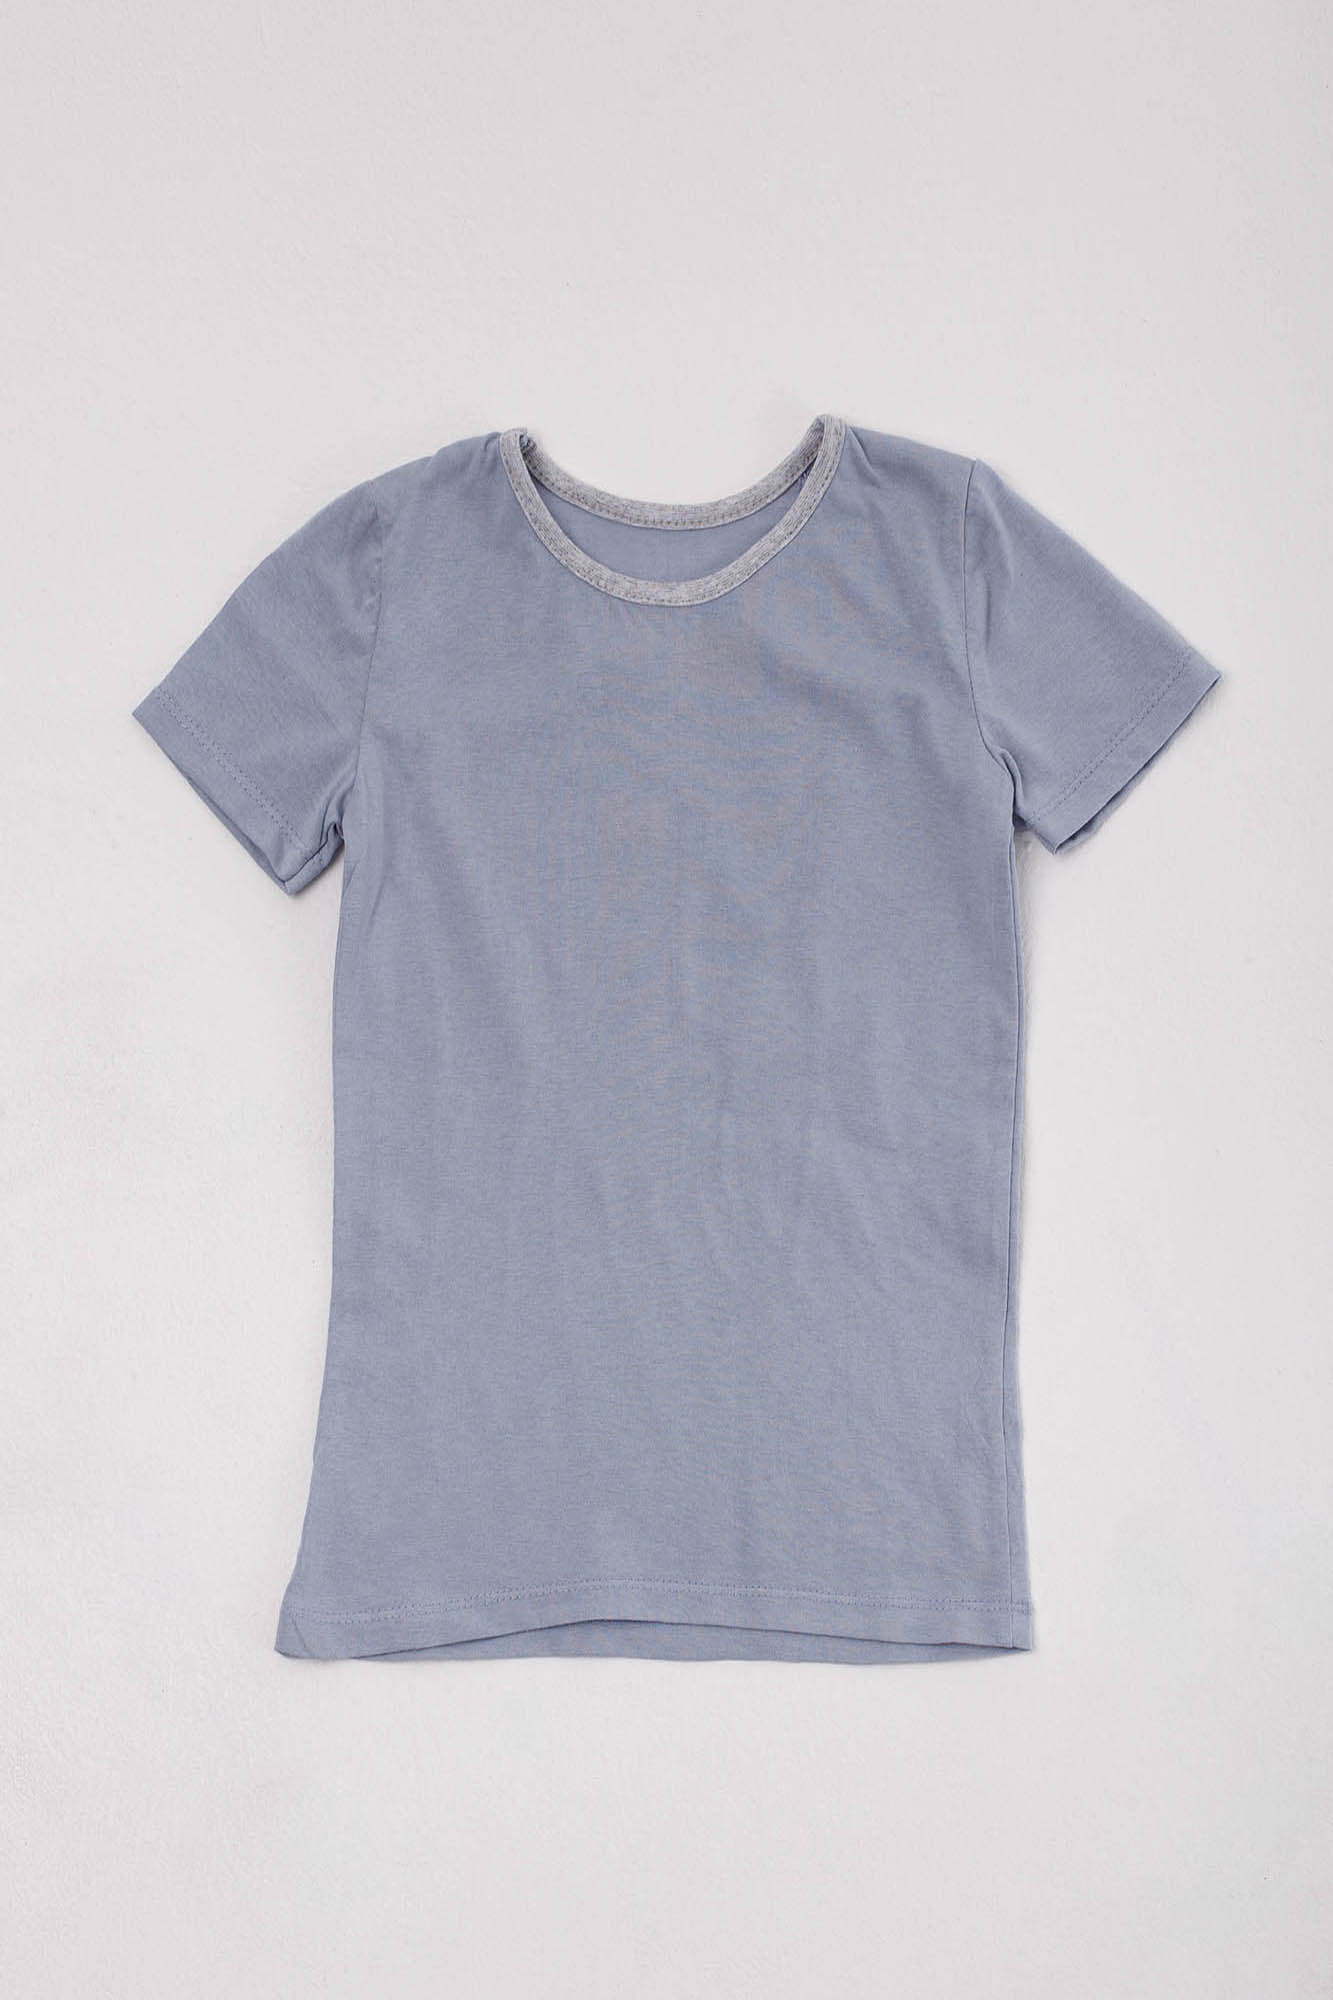 Детская футболка Aislin Цвет: Серый (5-6 лет), размер 5-6 лет zar680336 Детская футболка Aislin Цвет: Серый (5-6 лет) - фото 1